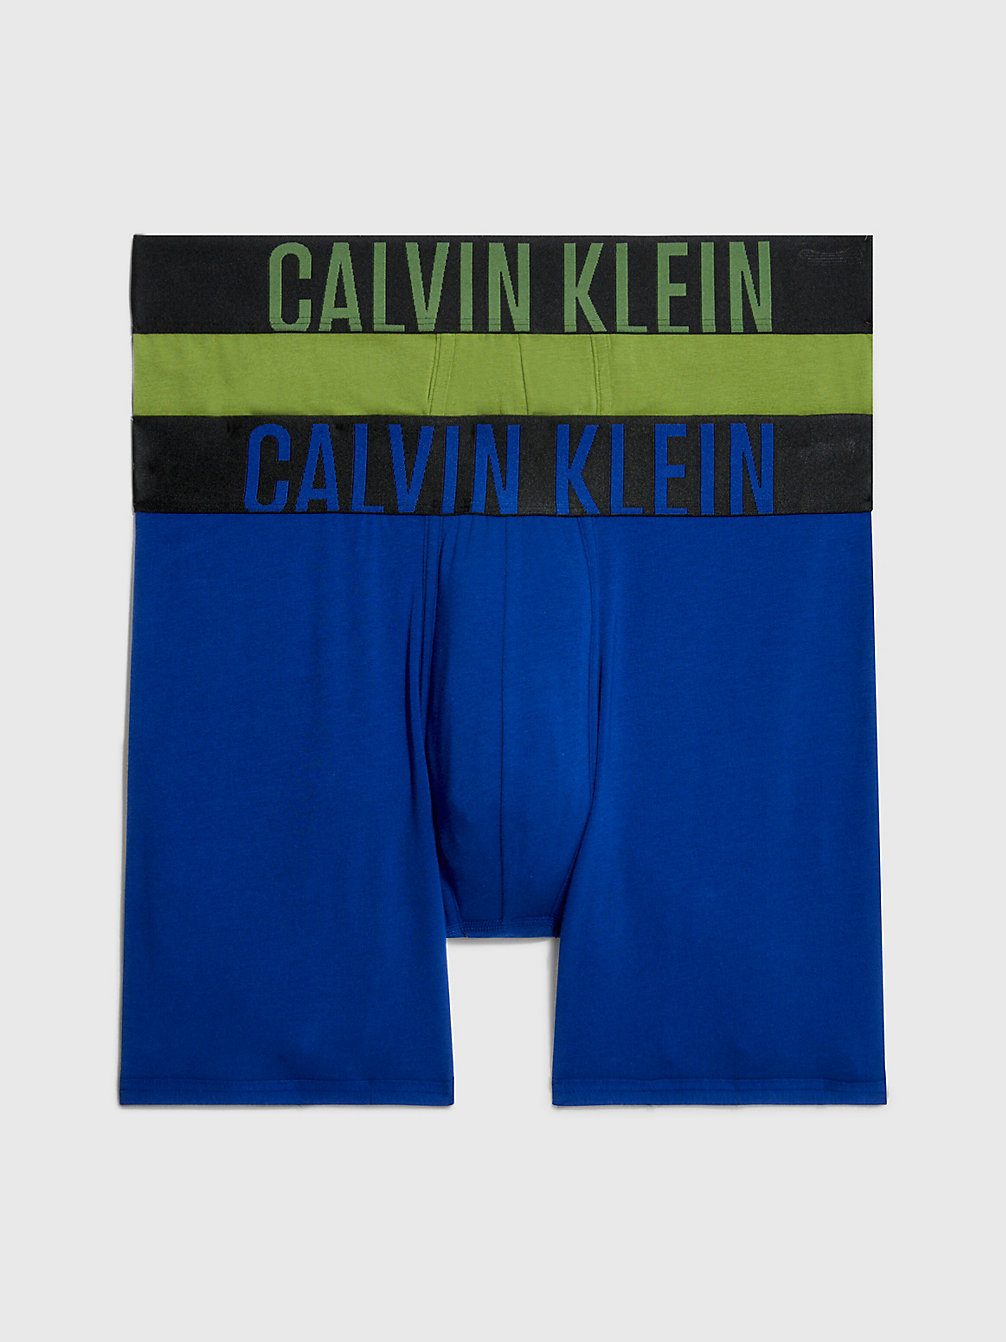 MIDNIGHT BLUE, UNIQUE JADE Lot De 2 Boxers - Intense Power undefined hommes Calvin Klein